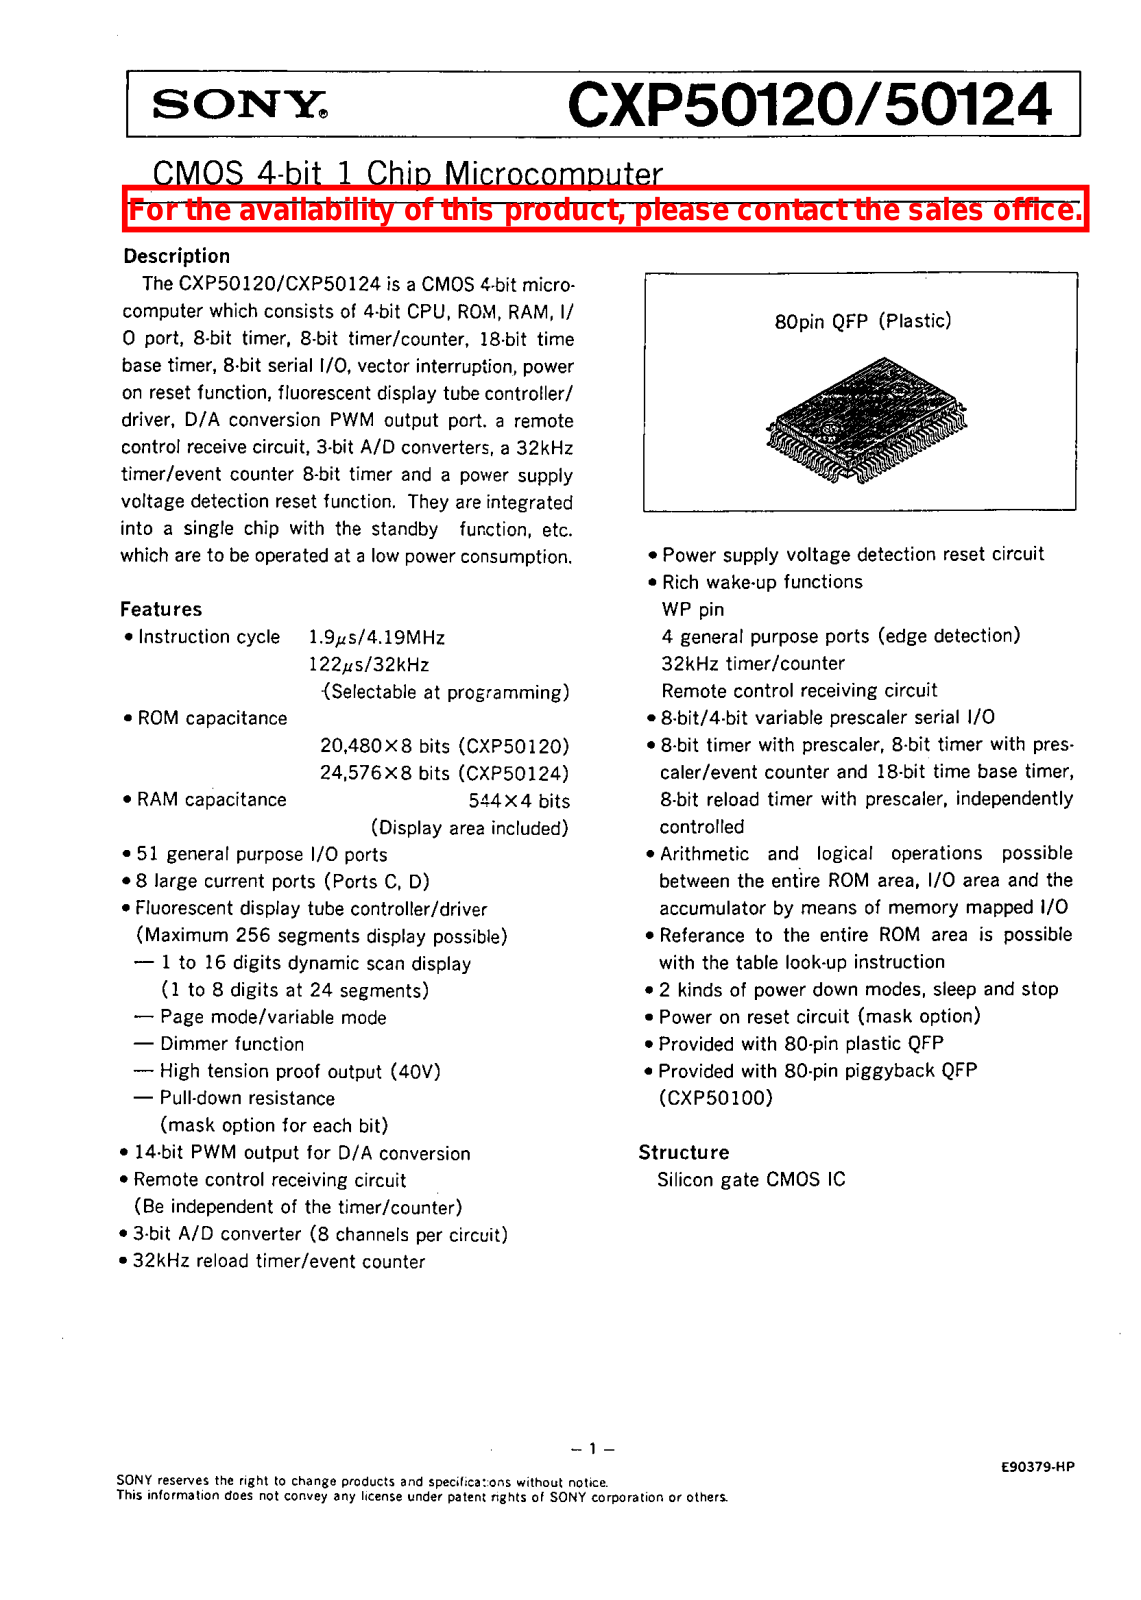 Sony CXP50124, CXP50120 Datasheet